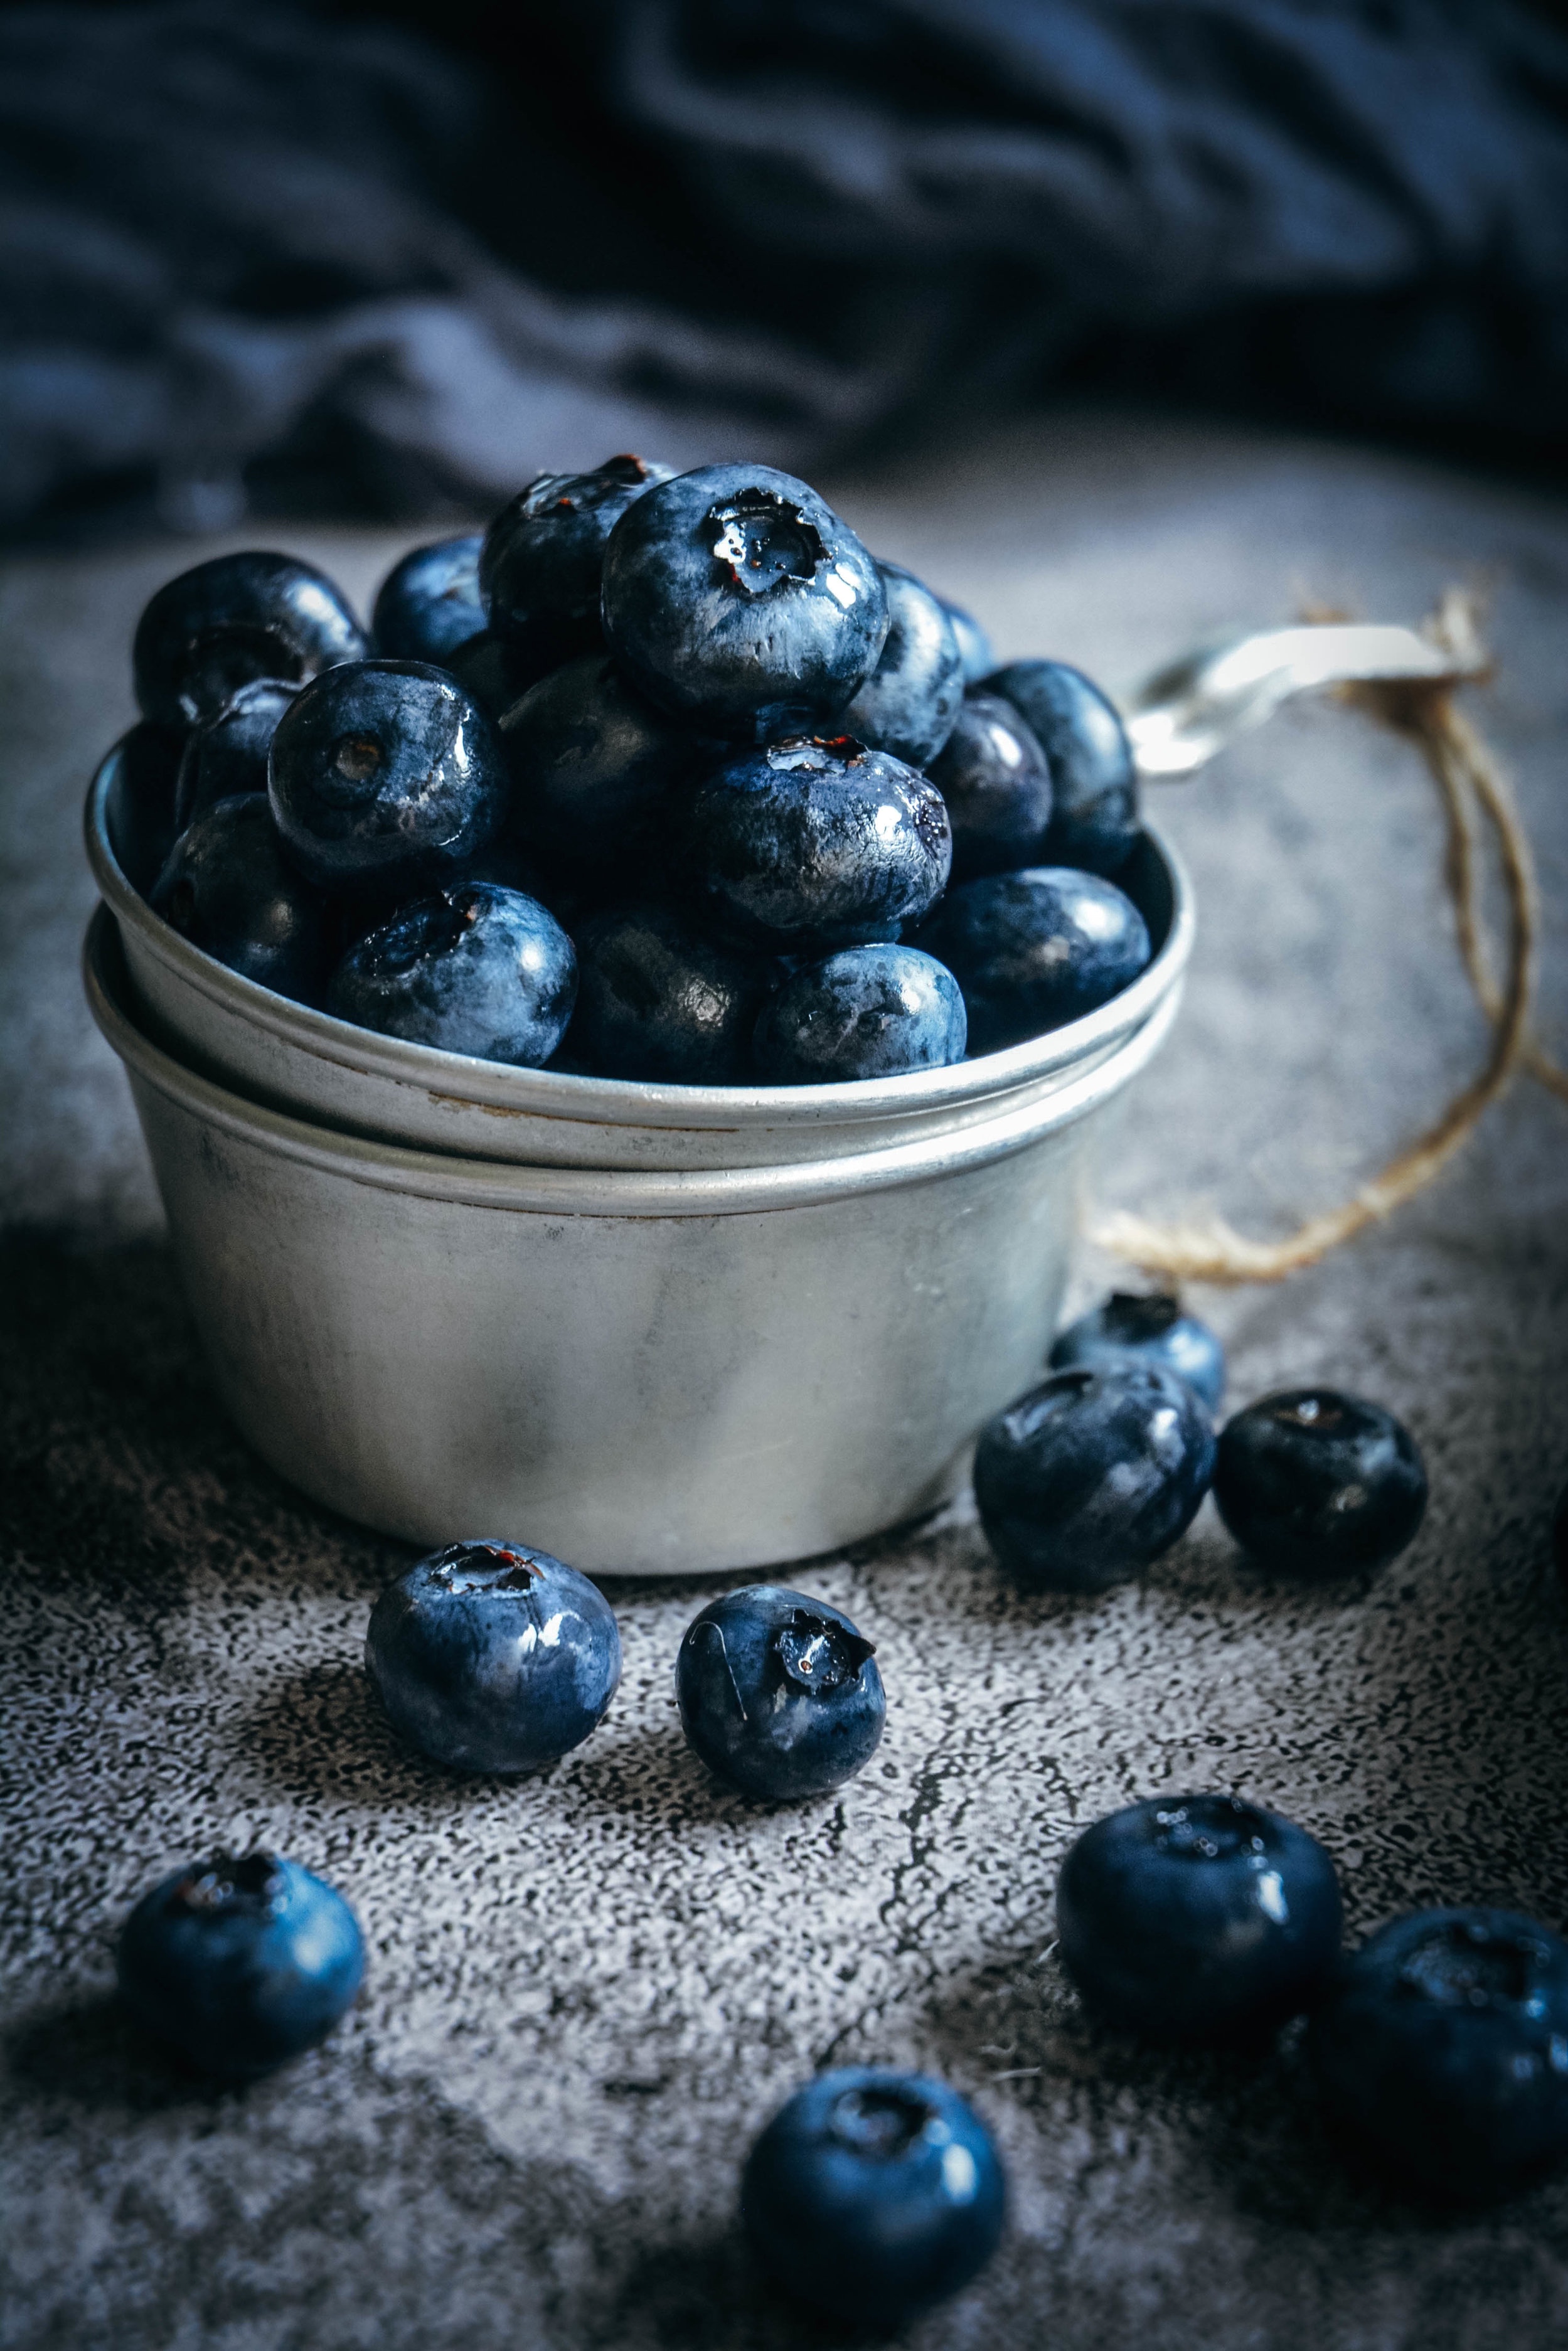  blueberries in measuring cup